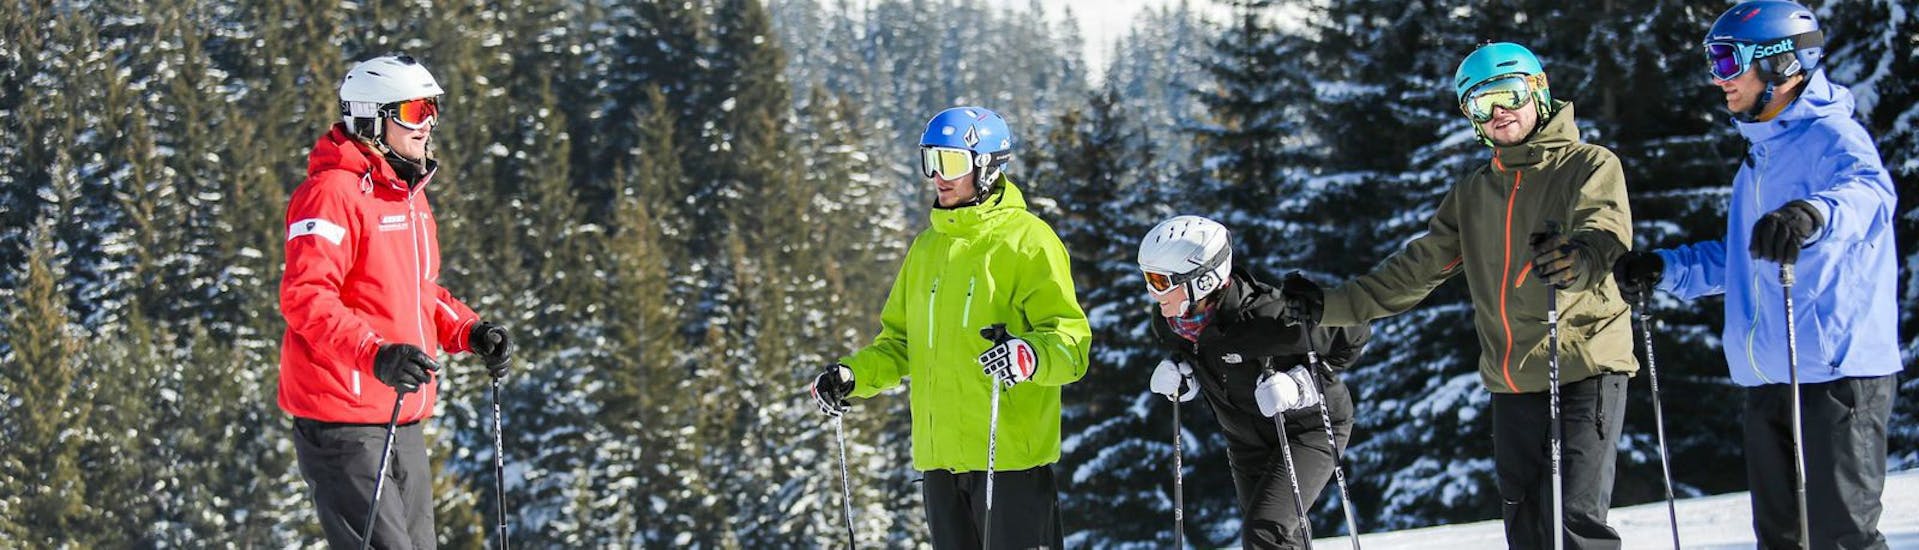 Lezioni di sci per adulti a partire da 16 anni principianti assoluti.